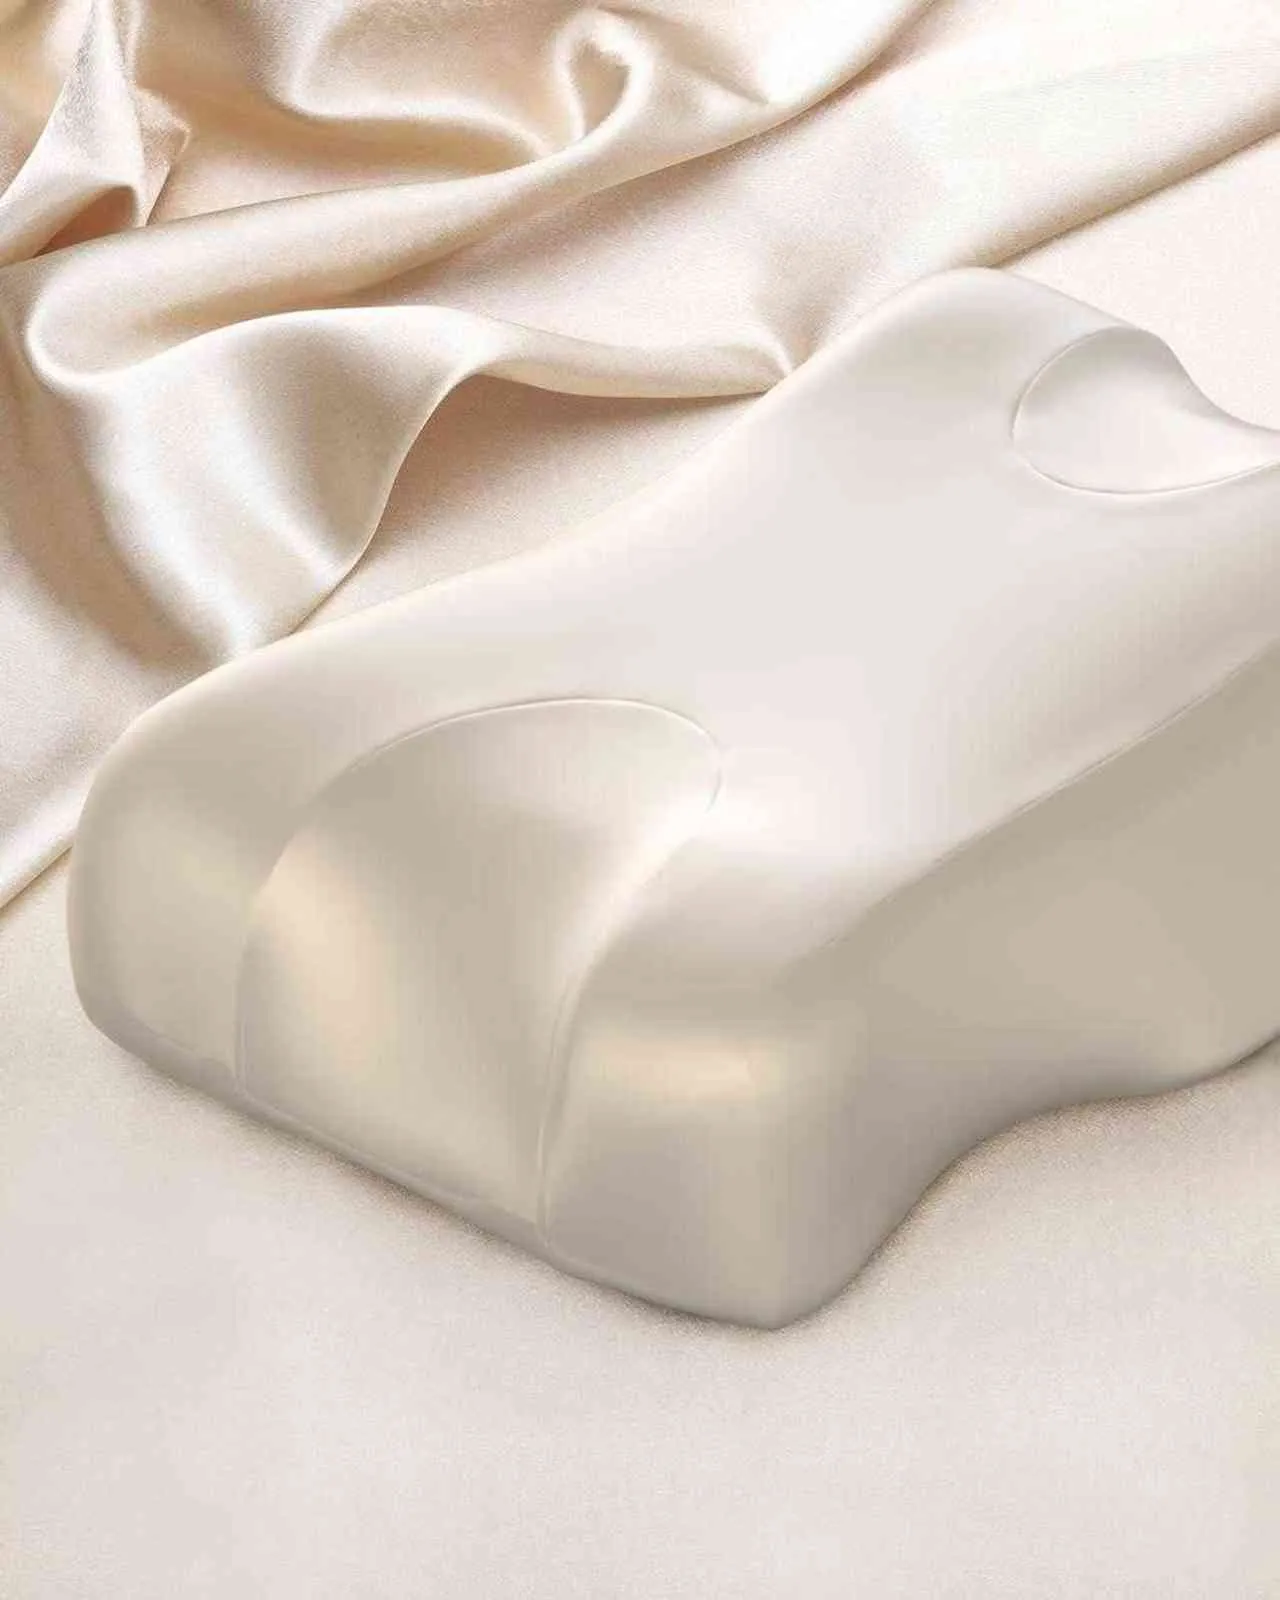 Orthopedic Memory Foam Beauty Orthopedic Neck Pillow For Anti